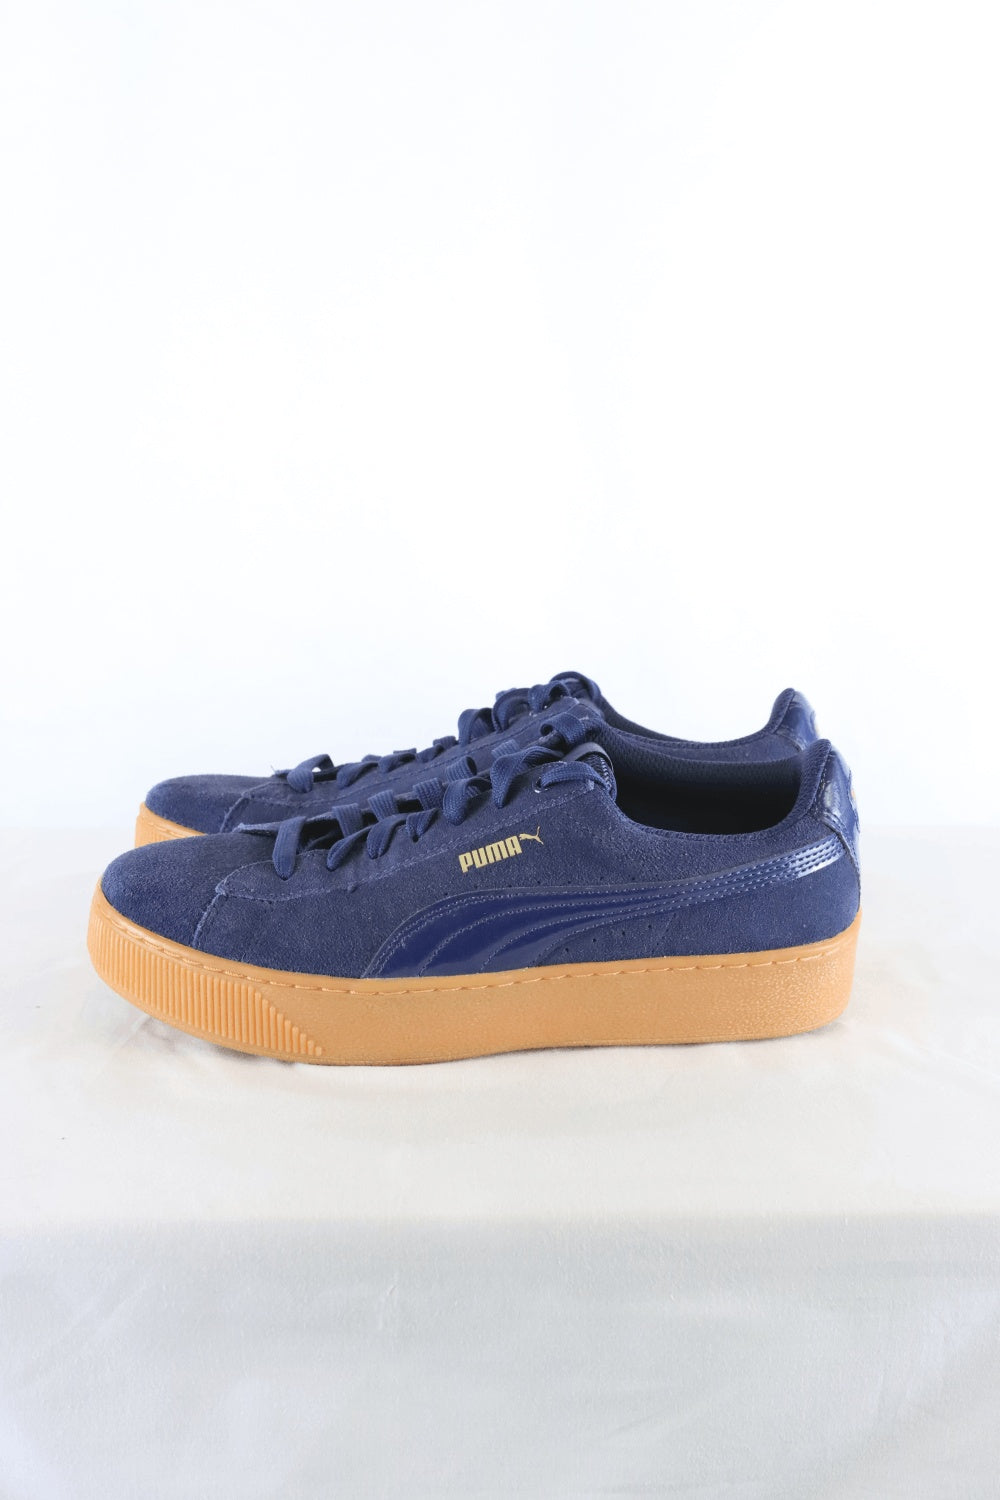 Puma Blue Sneakers - Reluv Australia